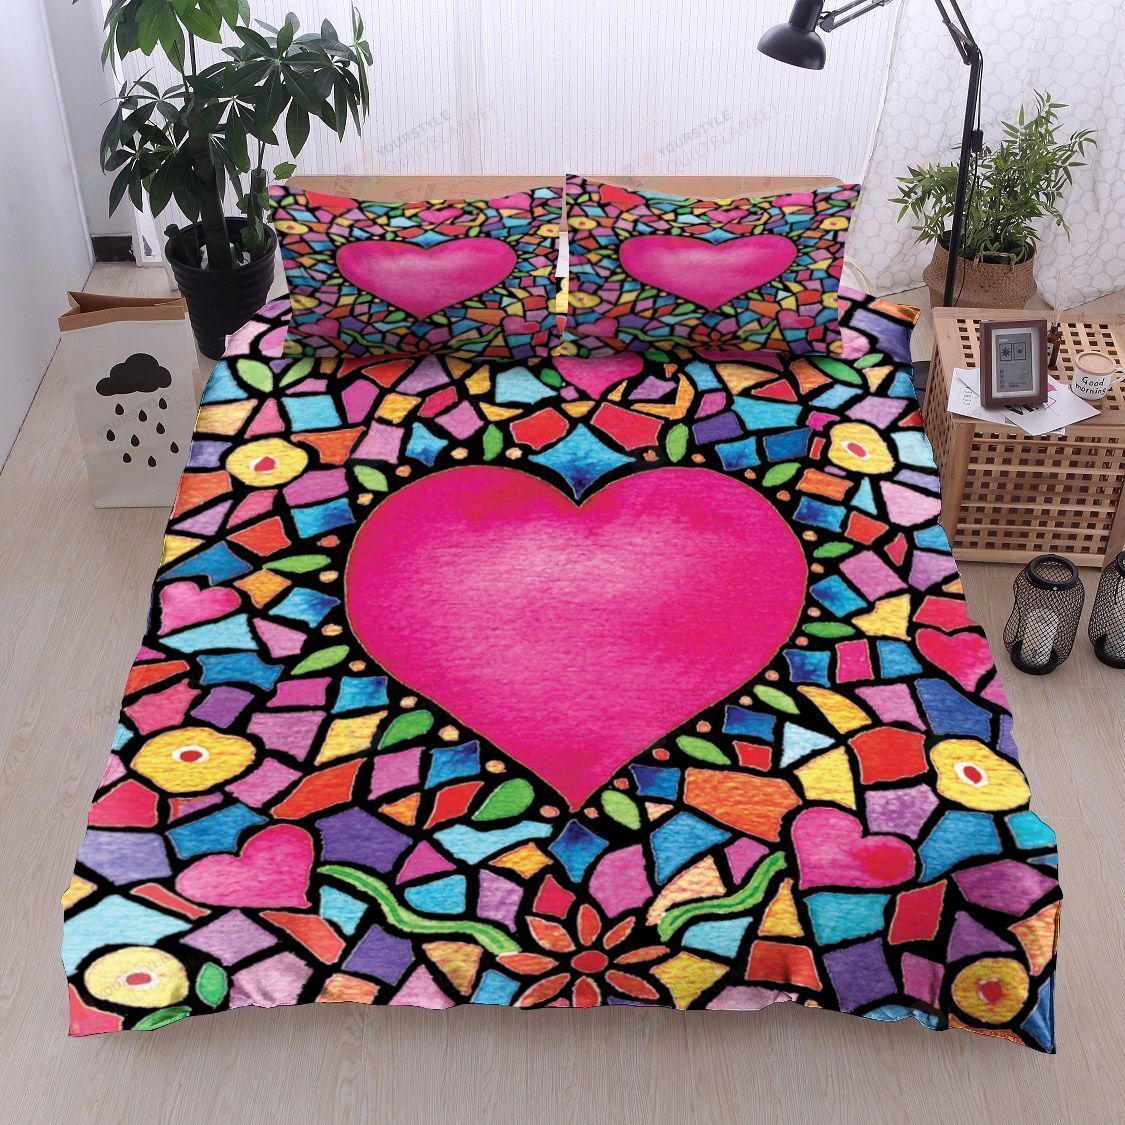 Heart Cotton Bed Sheets Spread Comforter Duvet Cover Bedding Sets